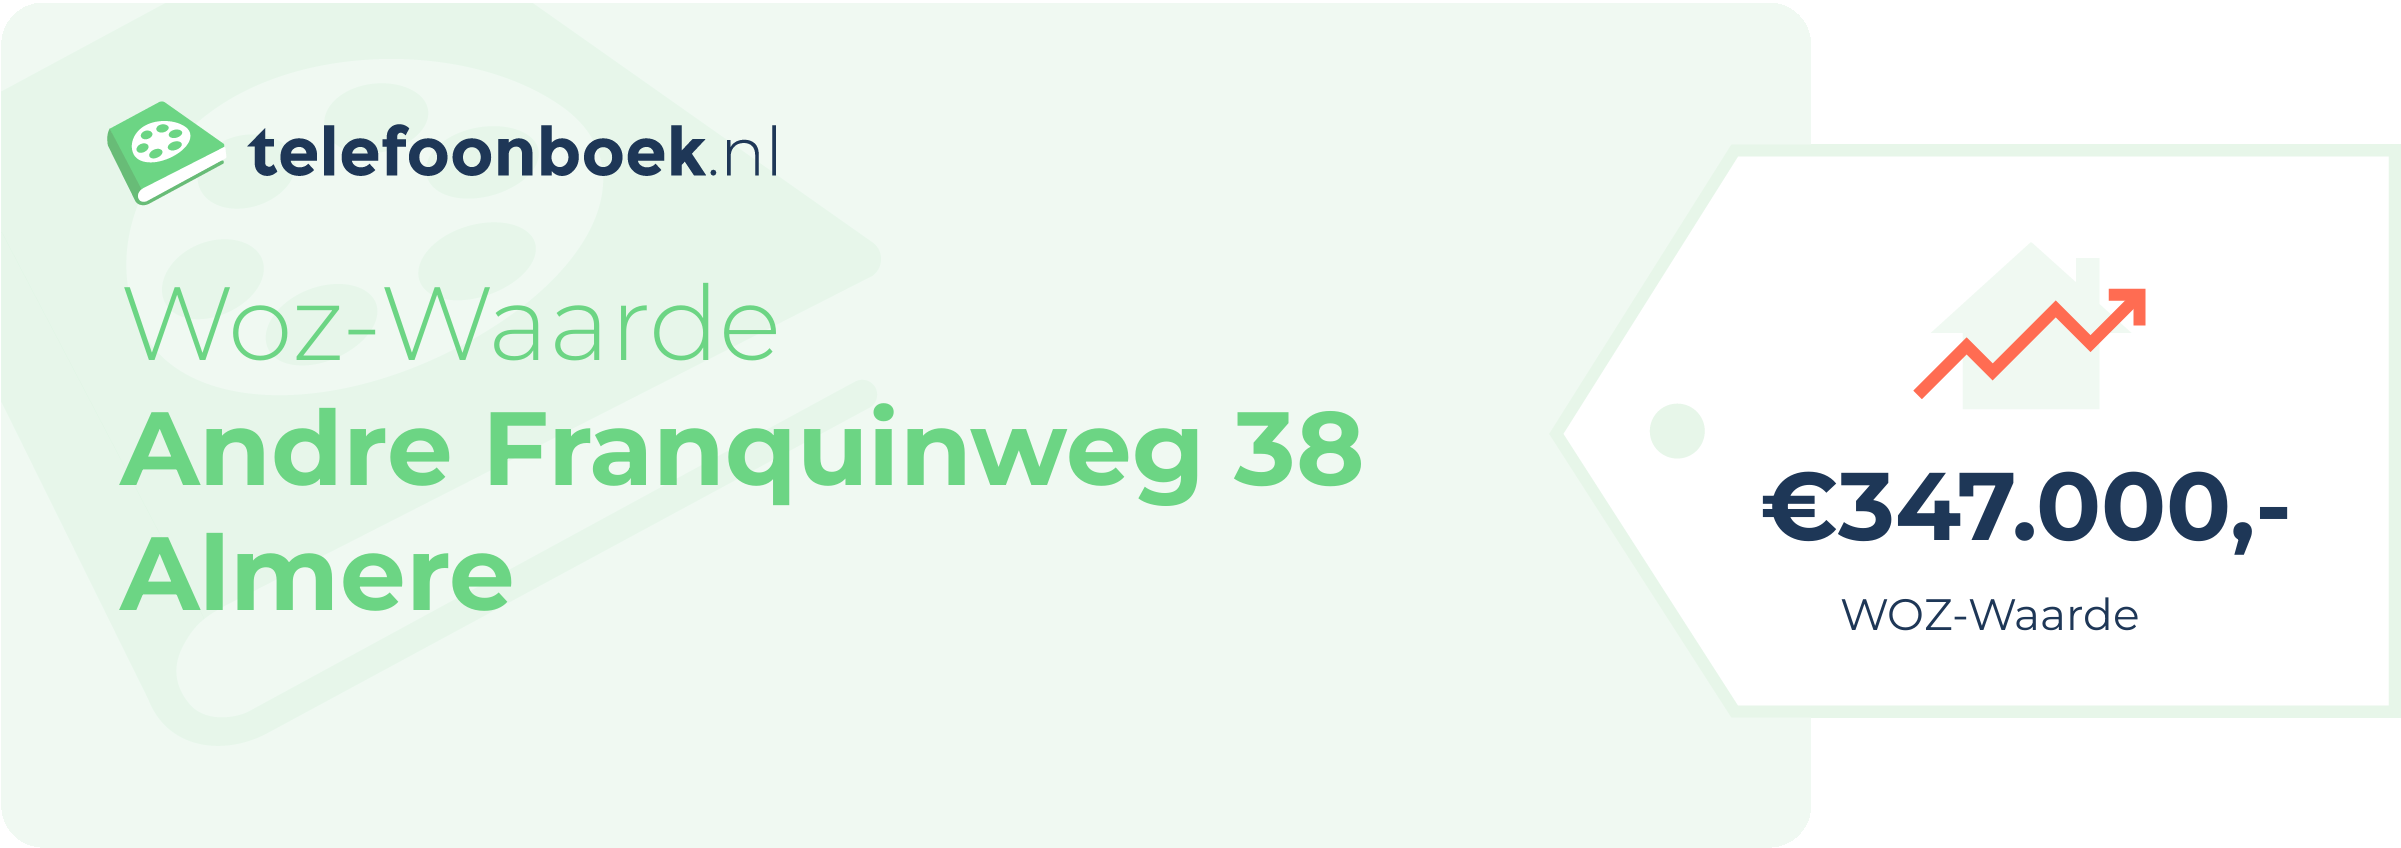 WOZ-waarde Andre Franquinweg 38 Almere